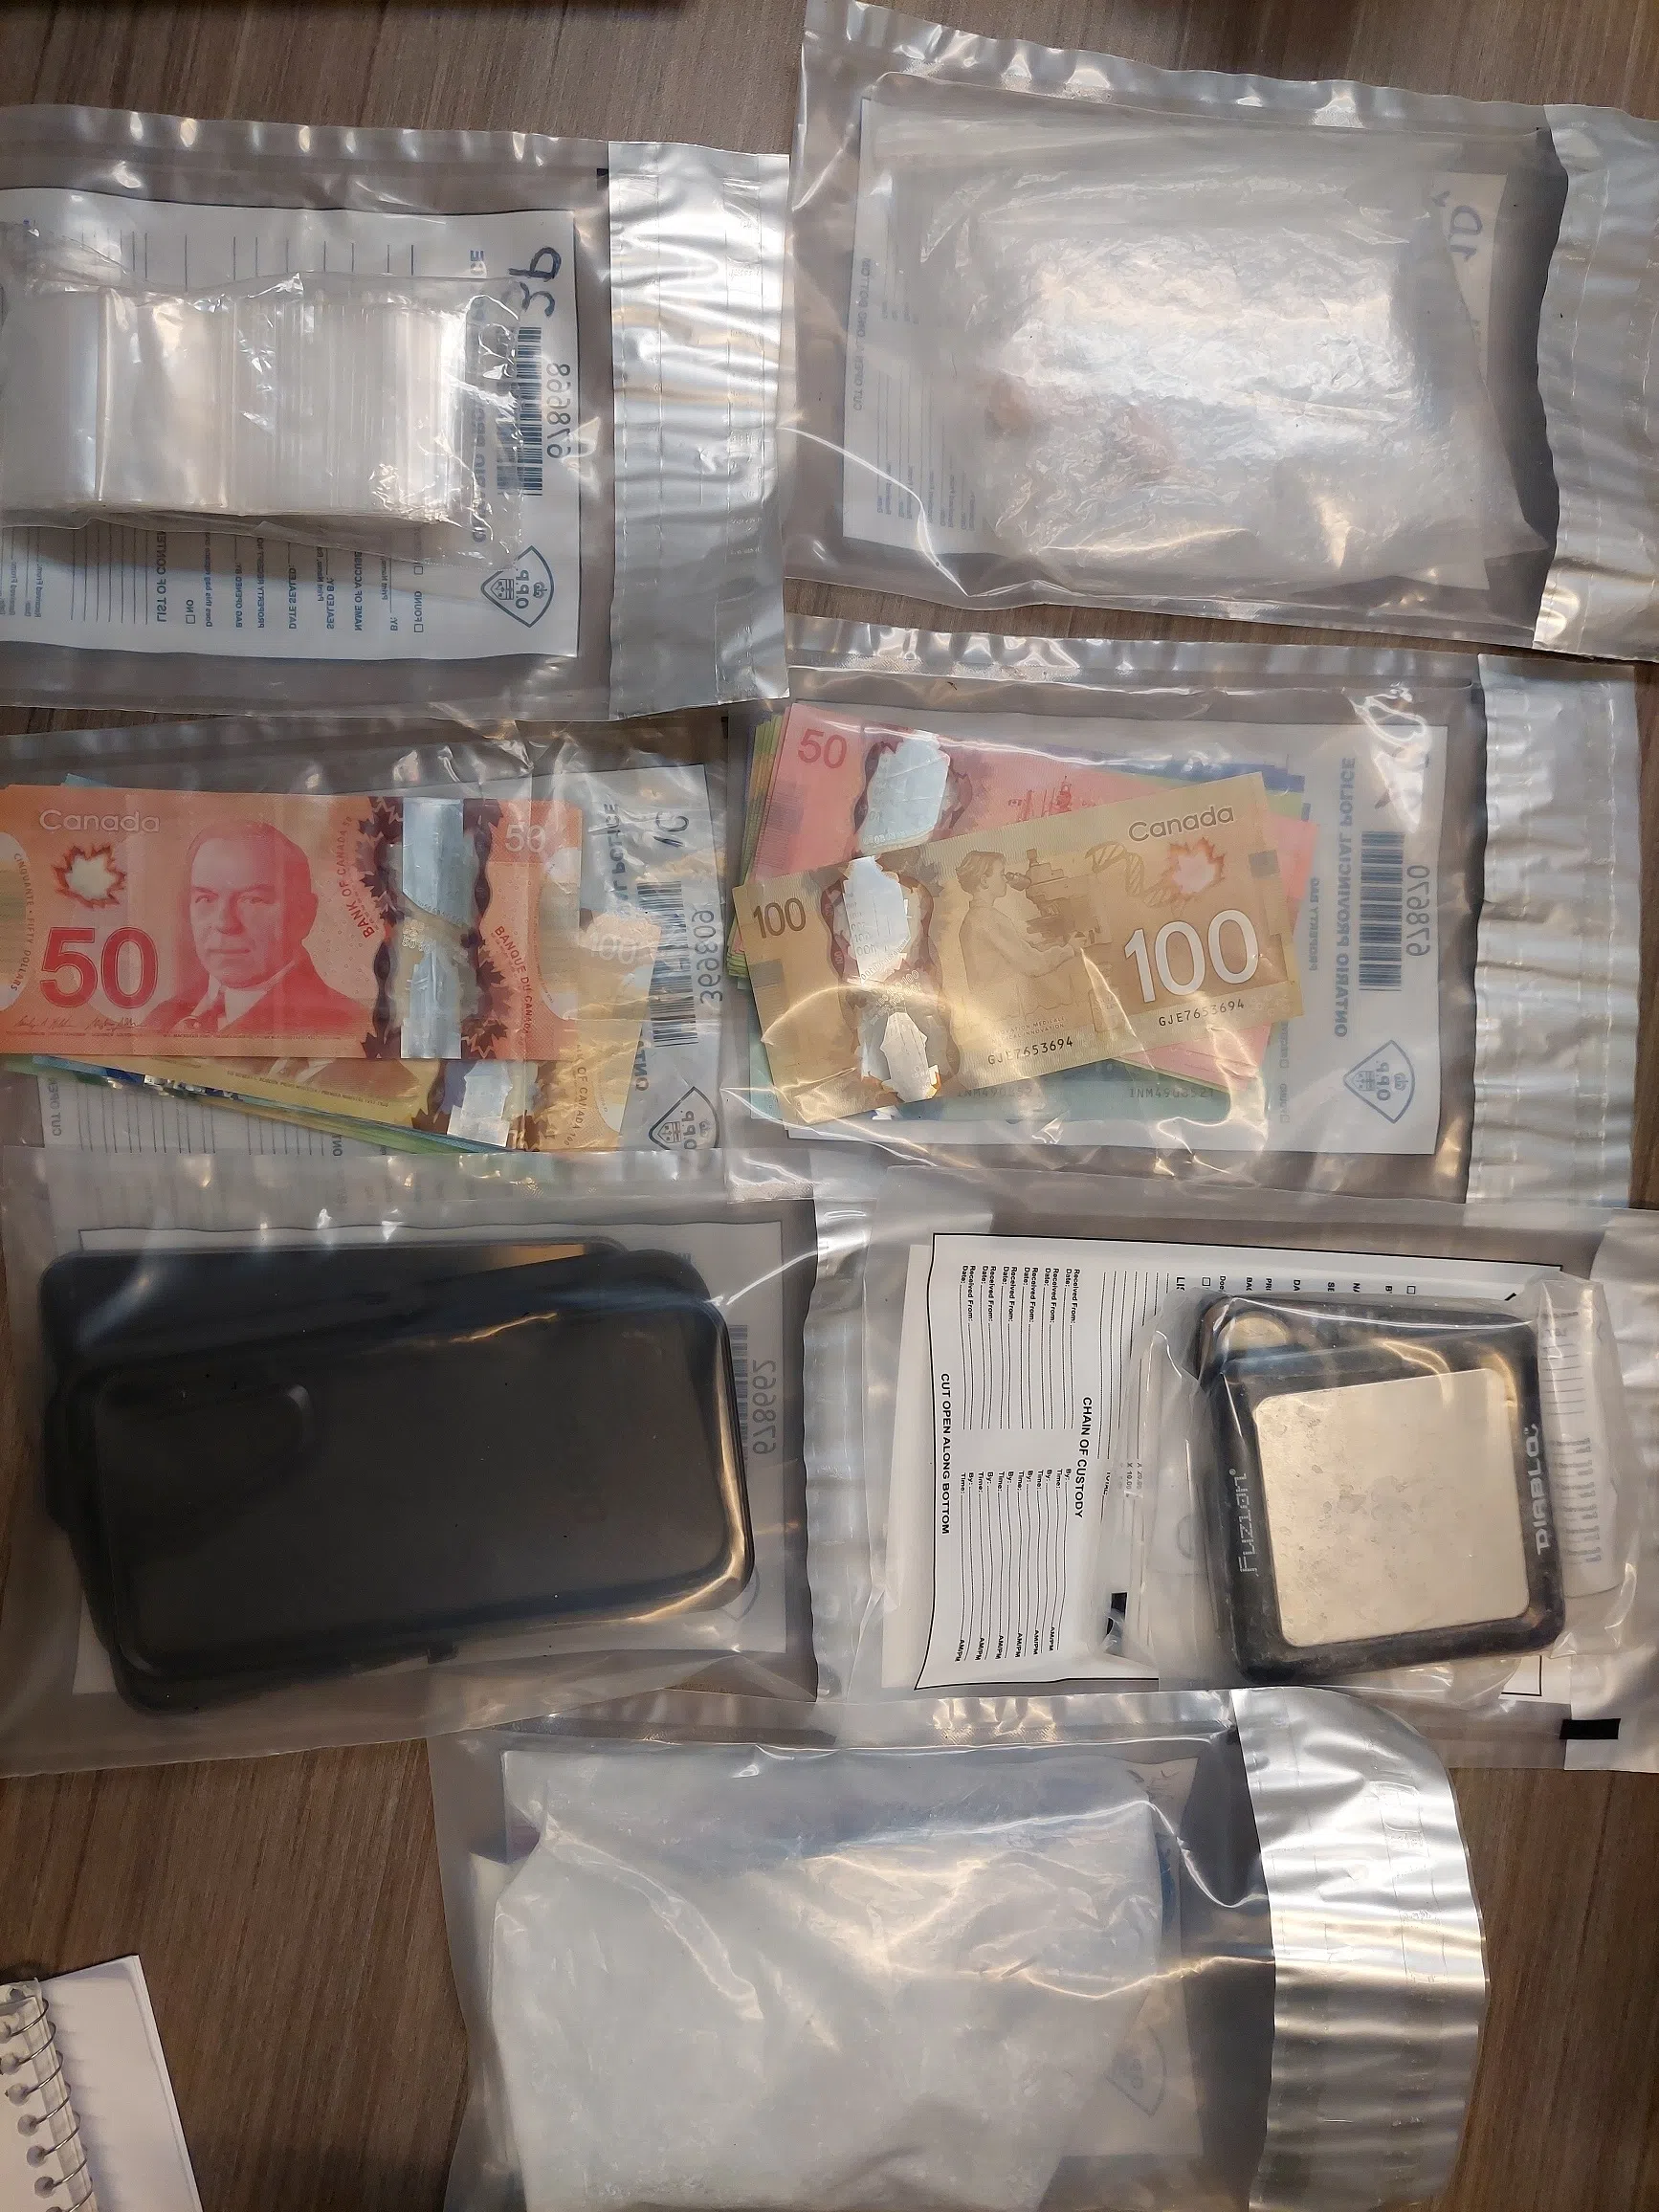 Coke and fentanyl seized in raid